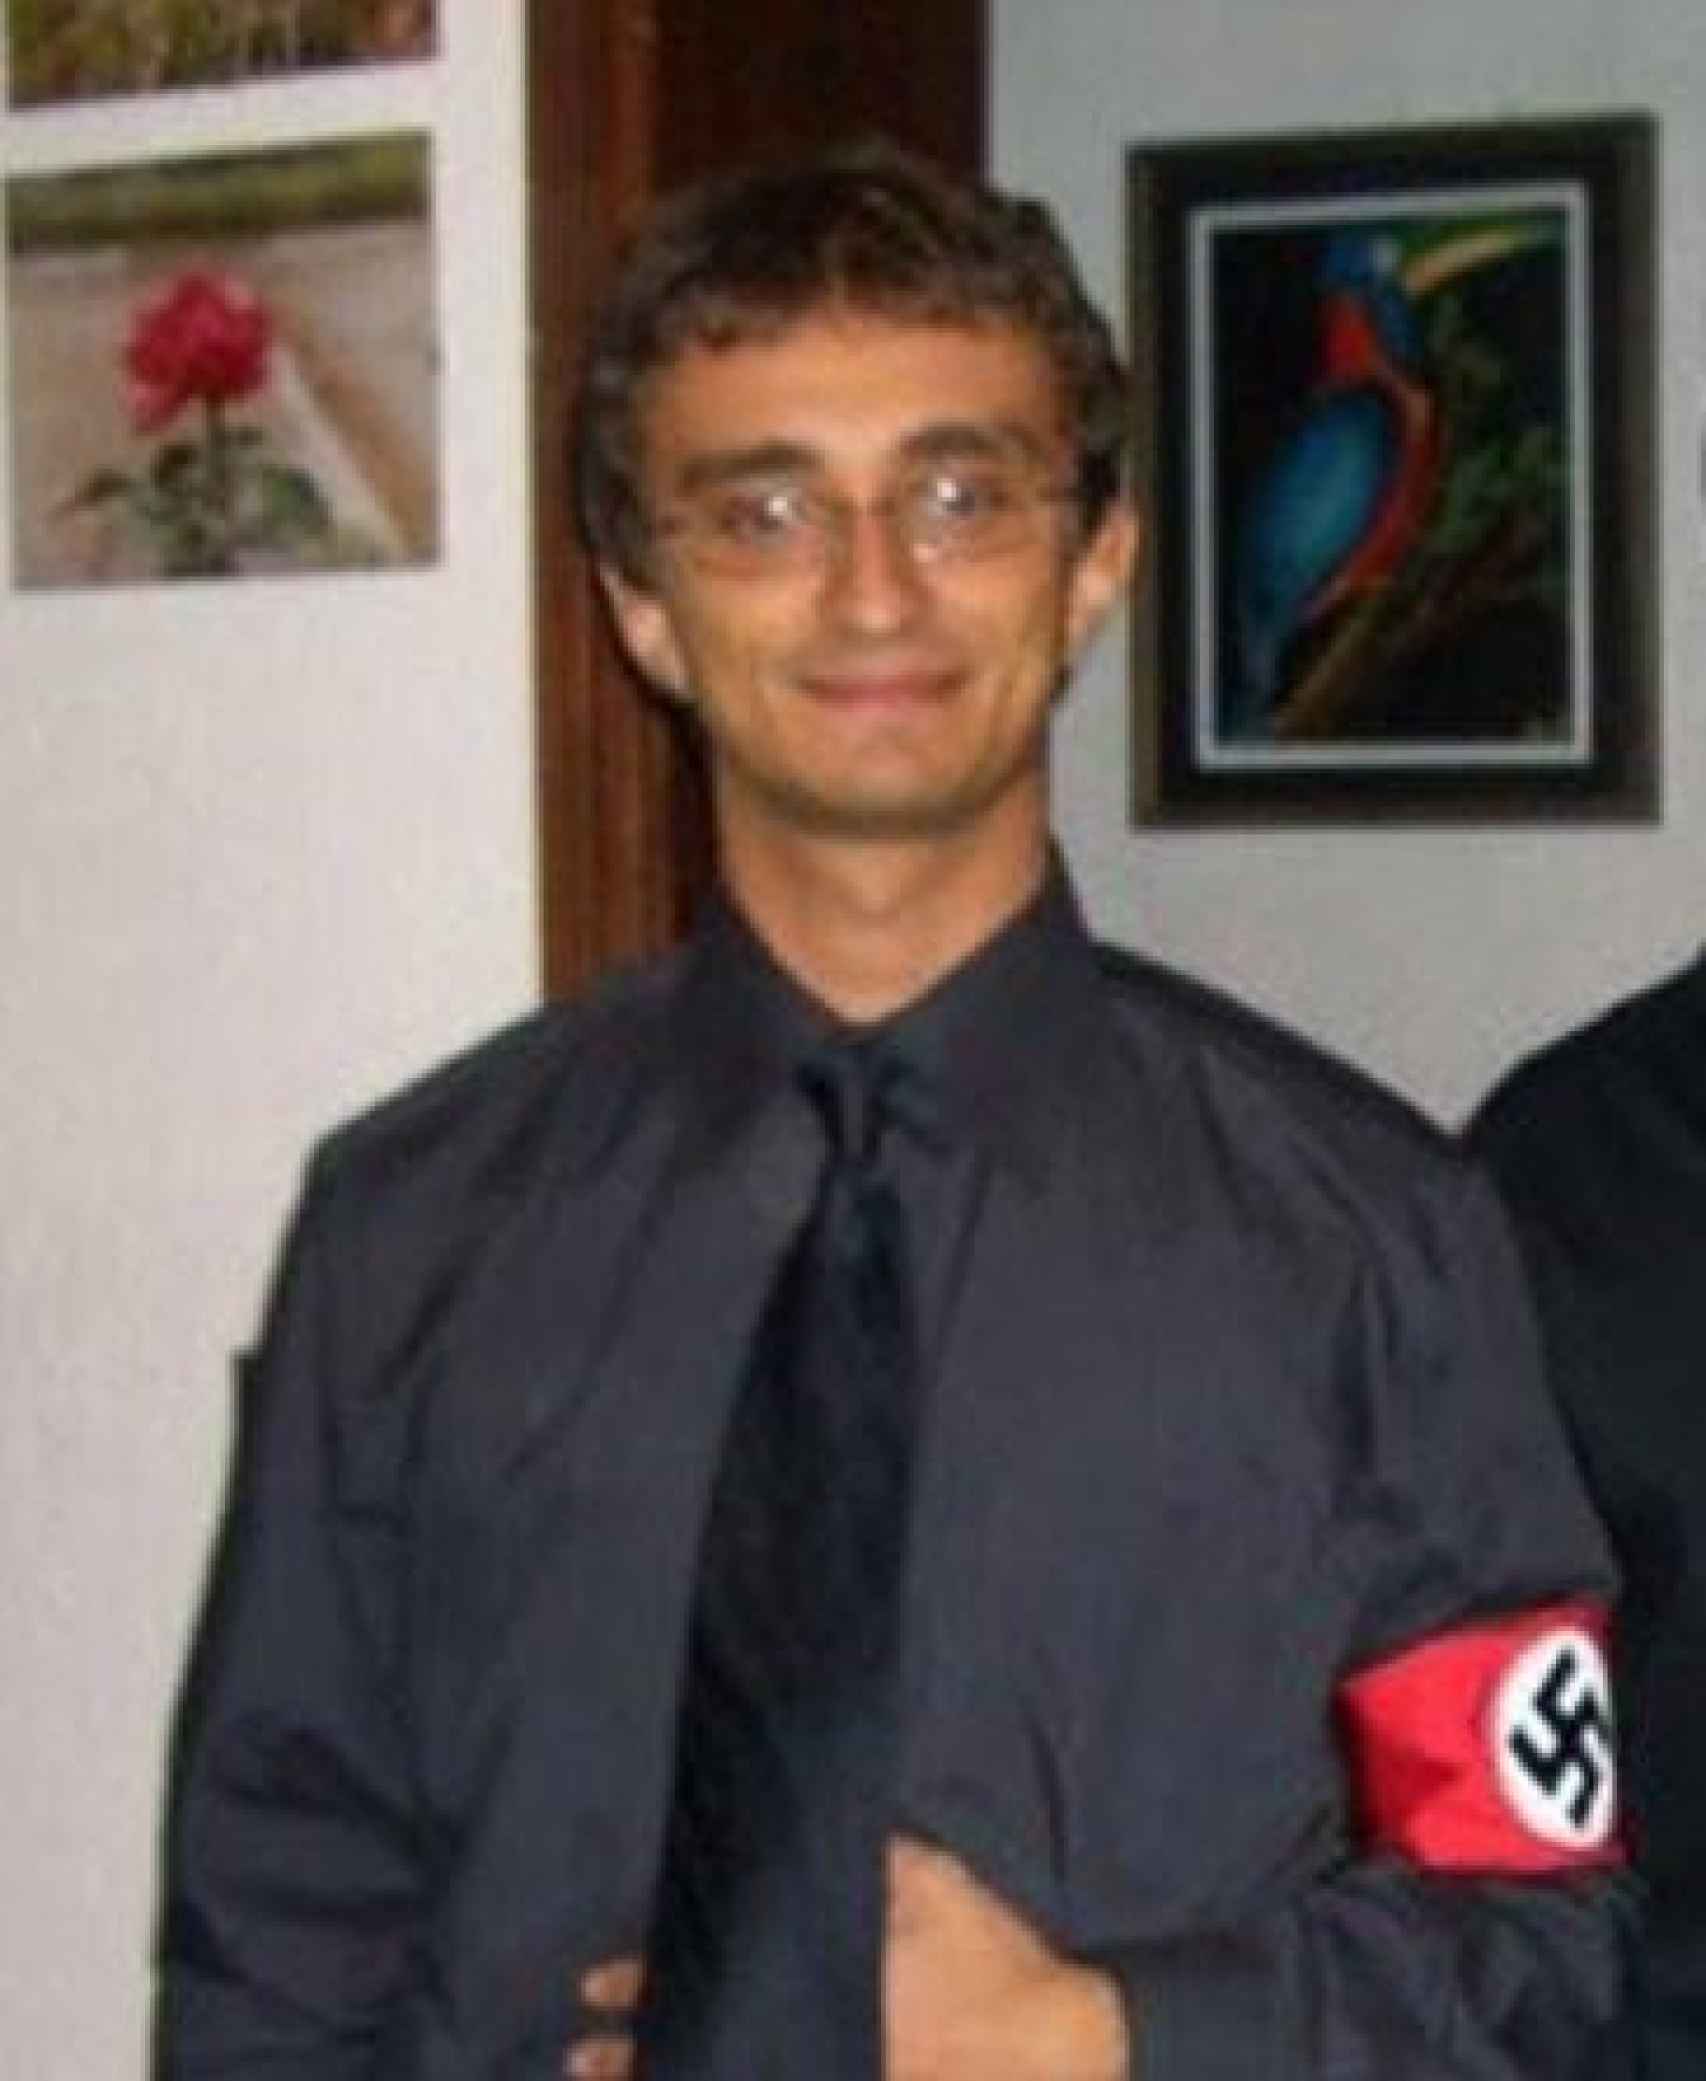 Galeazzo Bignami posa en la foto con el brazalete del partido nazi